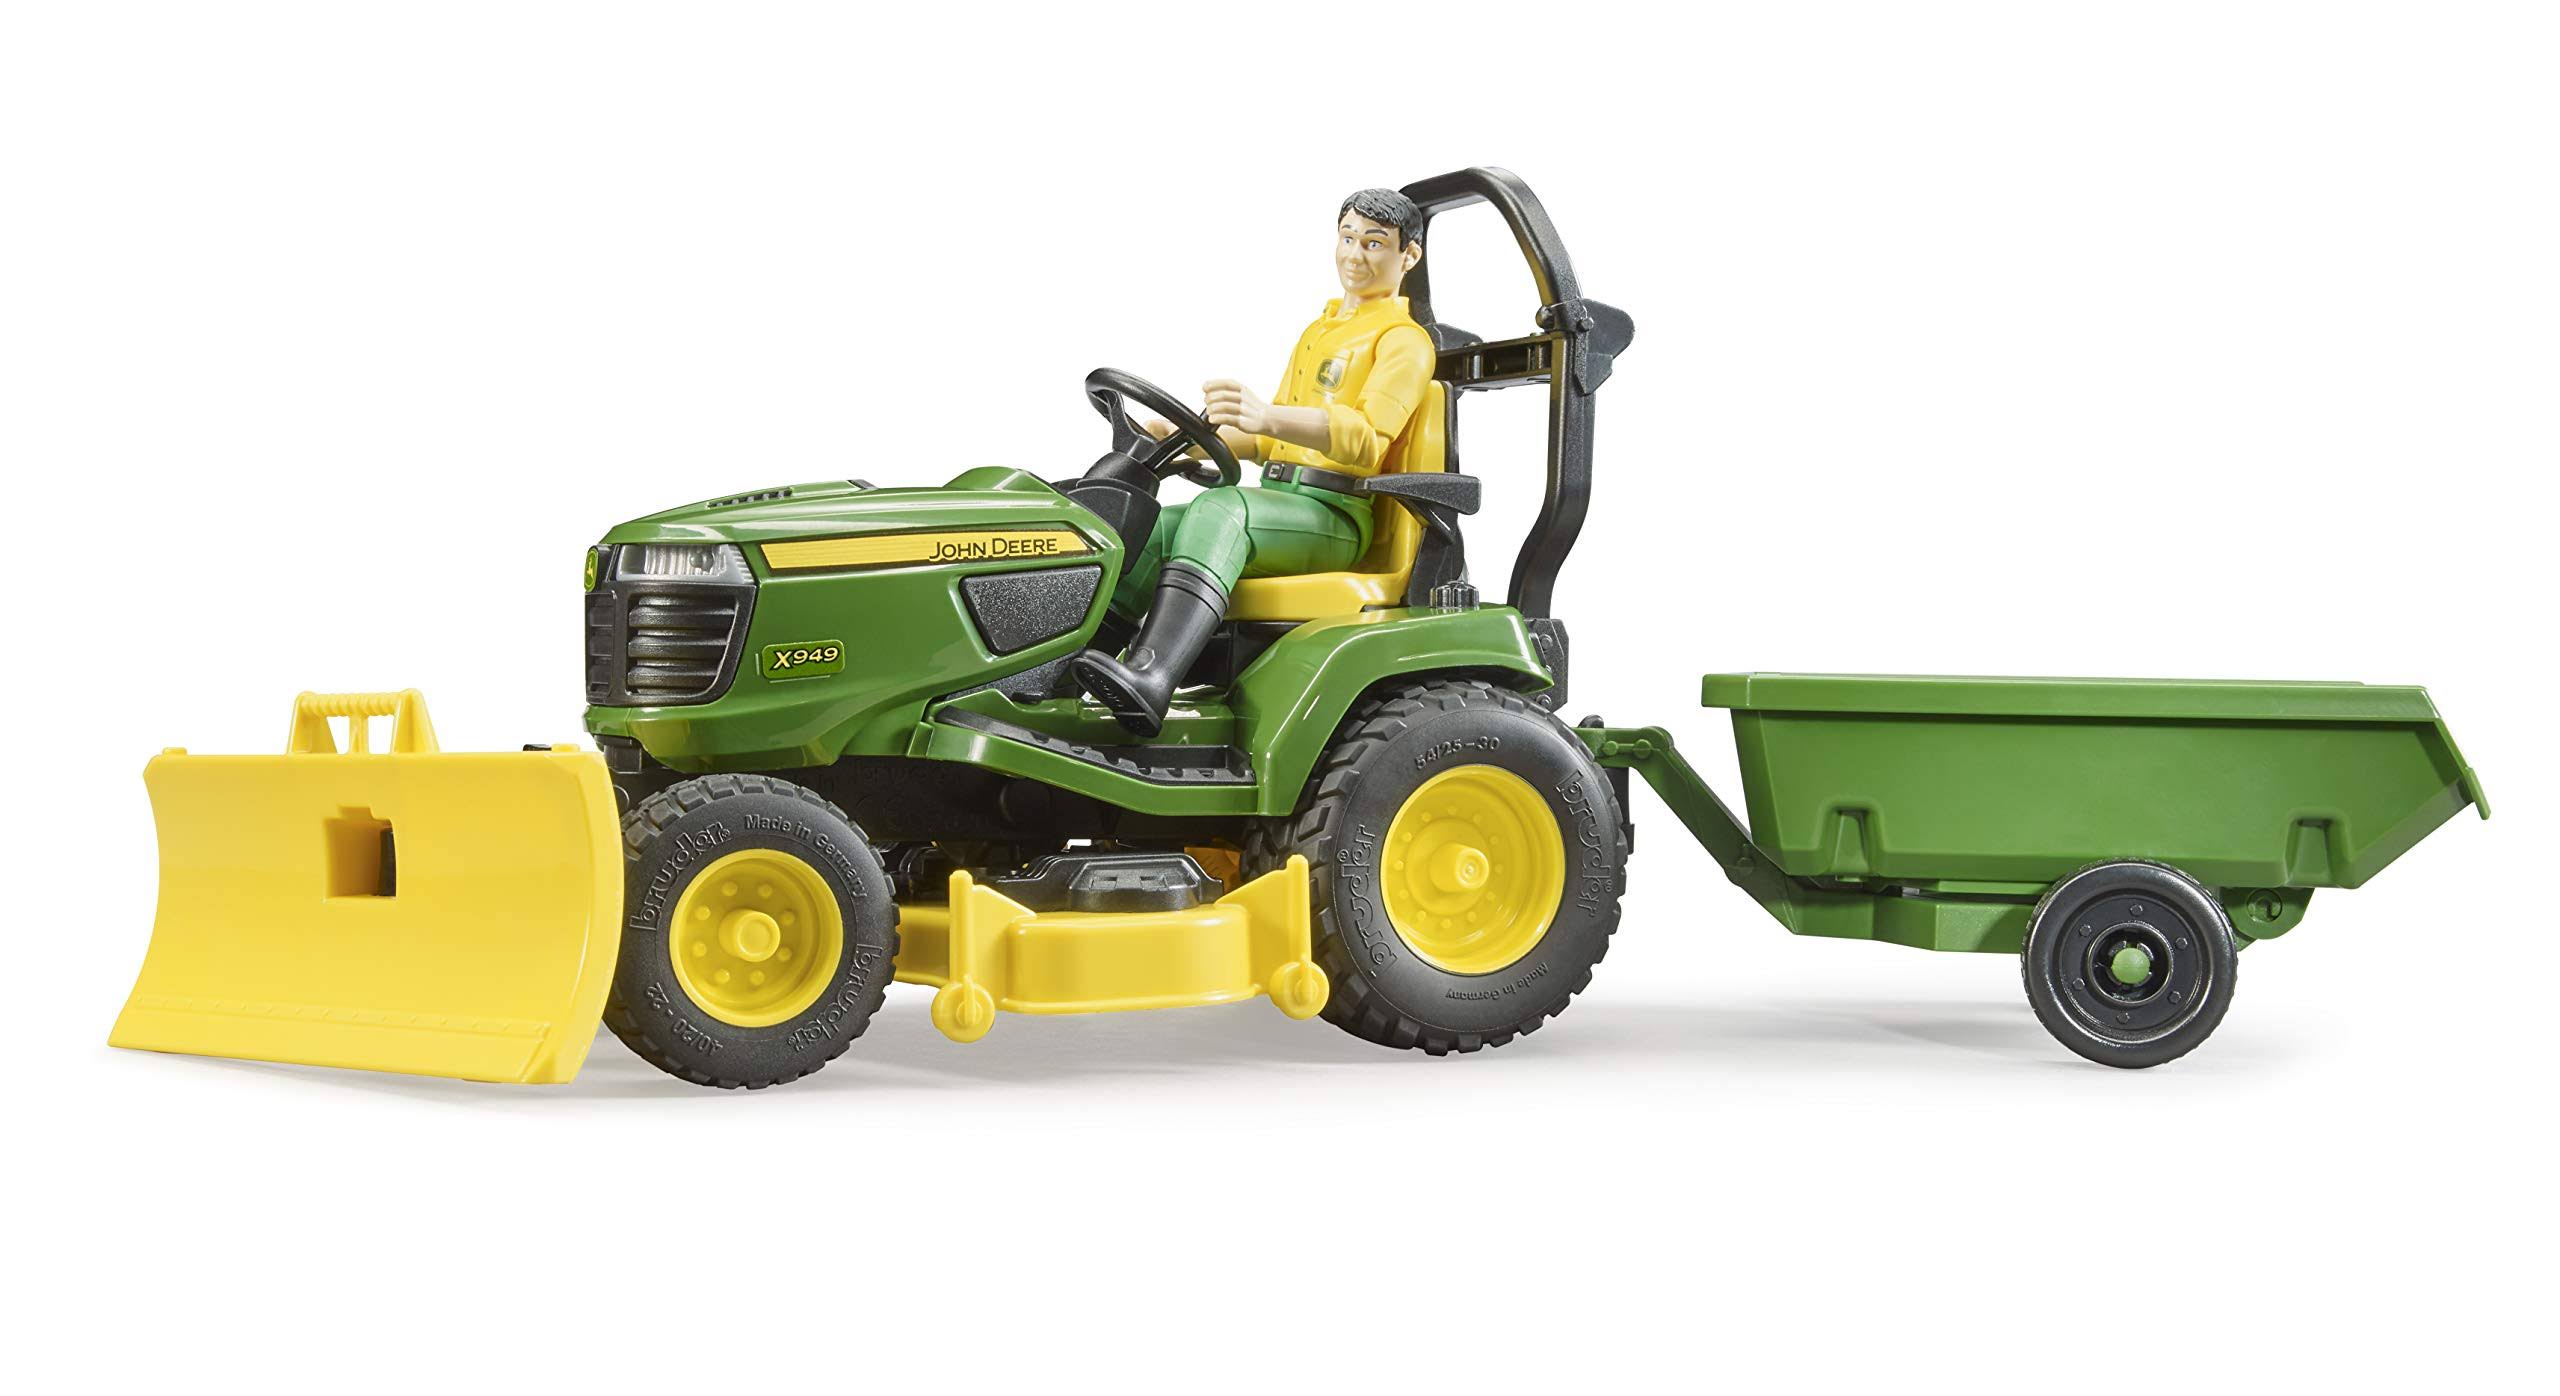 Bruder 09824 Bworld John Deere Lawn Tractor W Trailer and Gardener